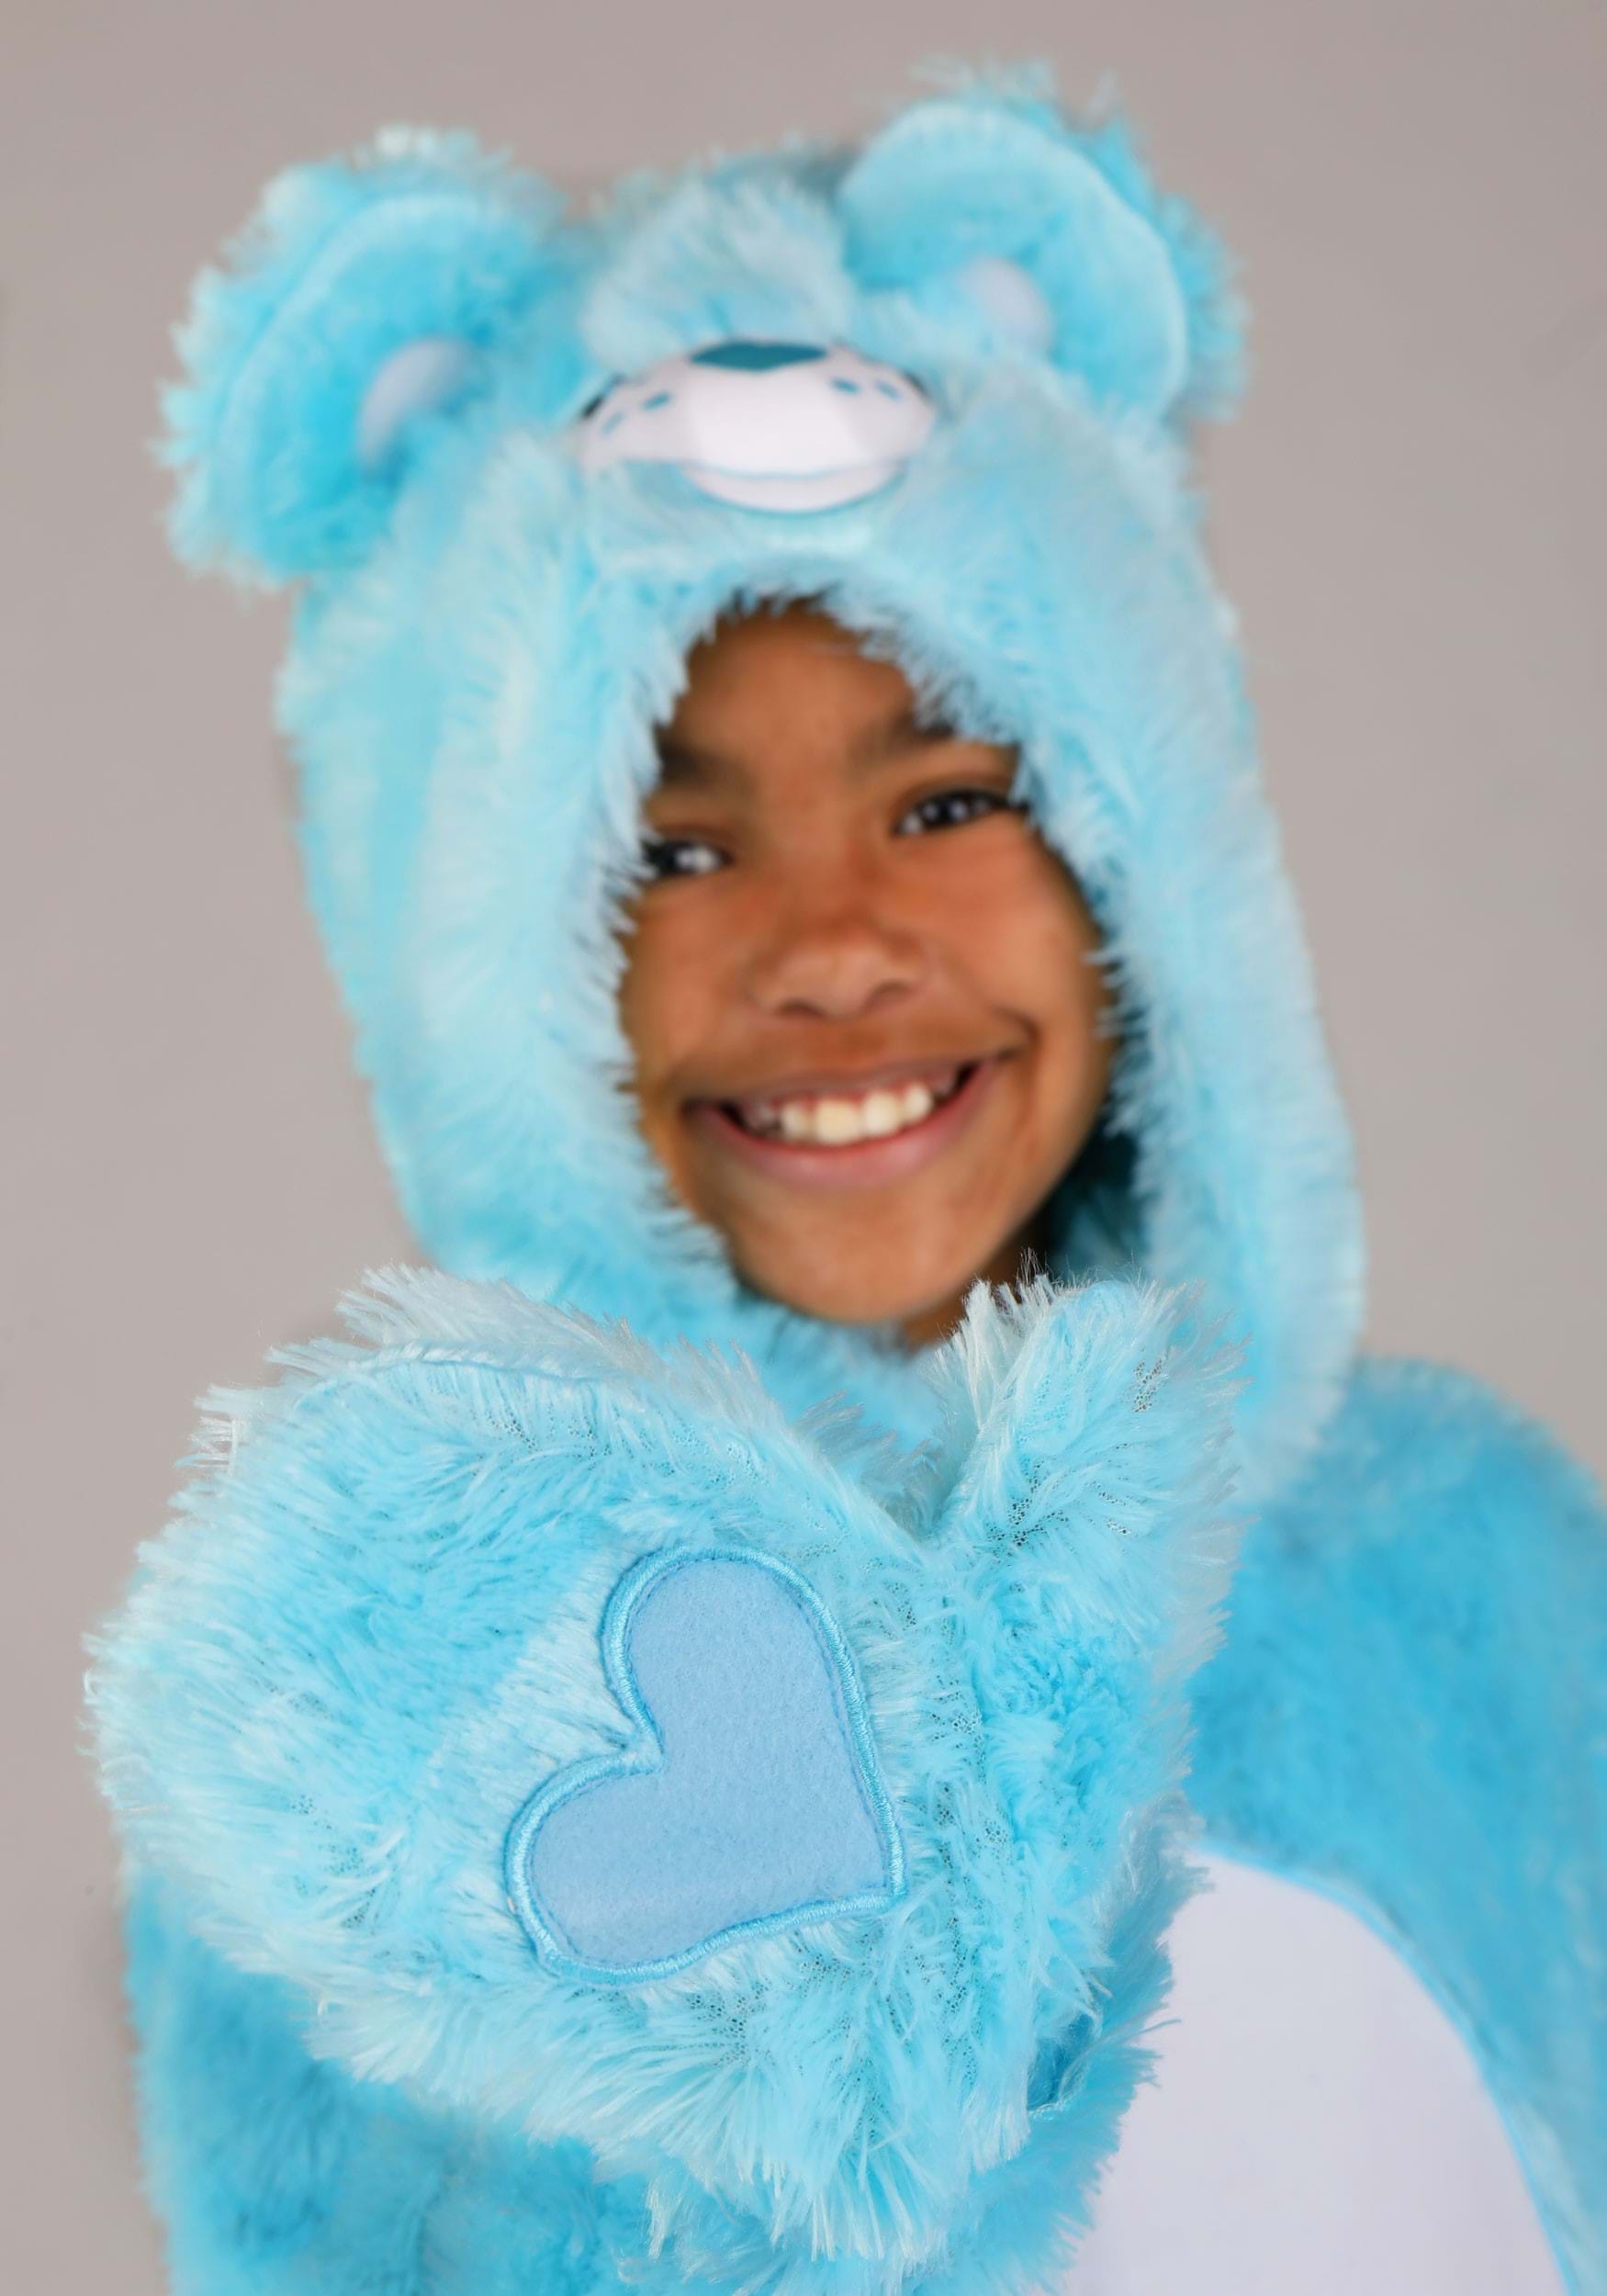 Child Classic Bedtime Bear Care Bears Costume